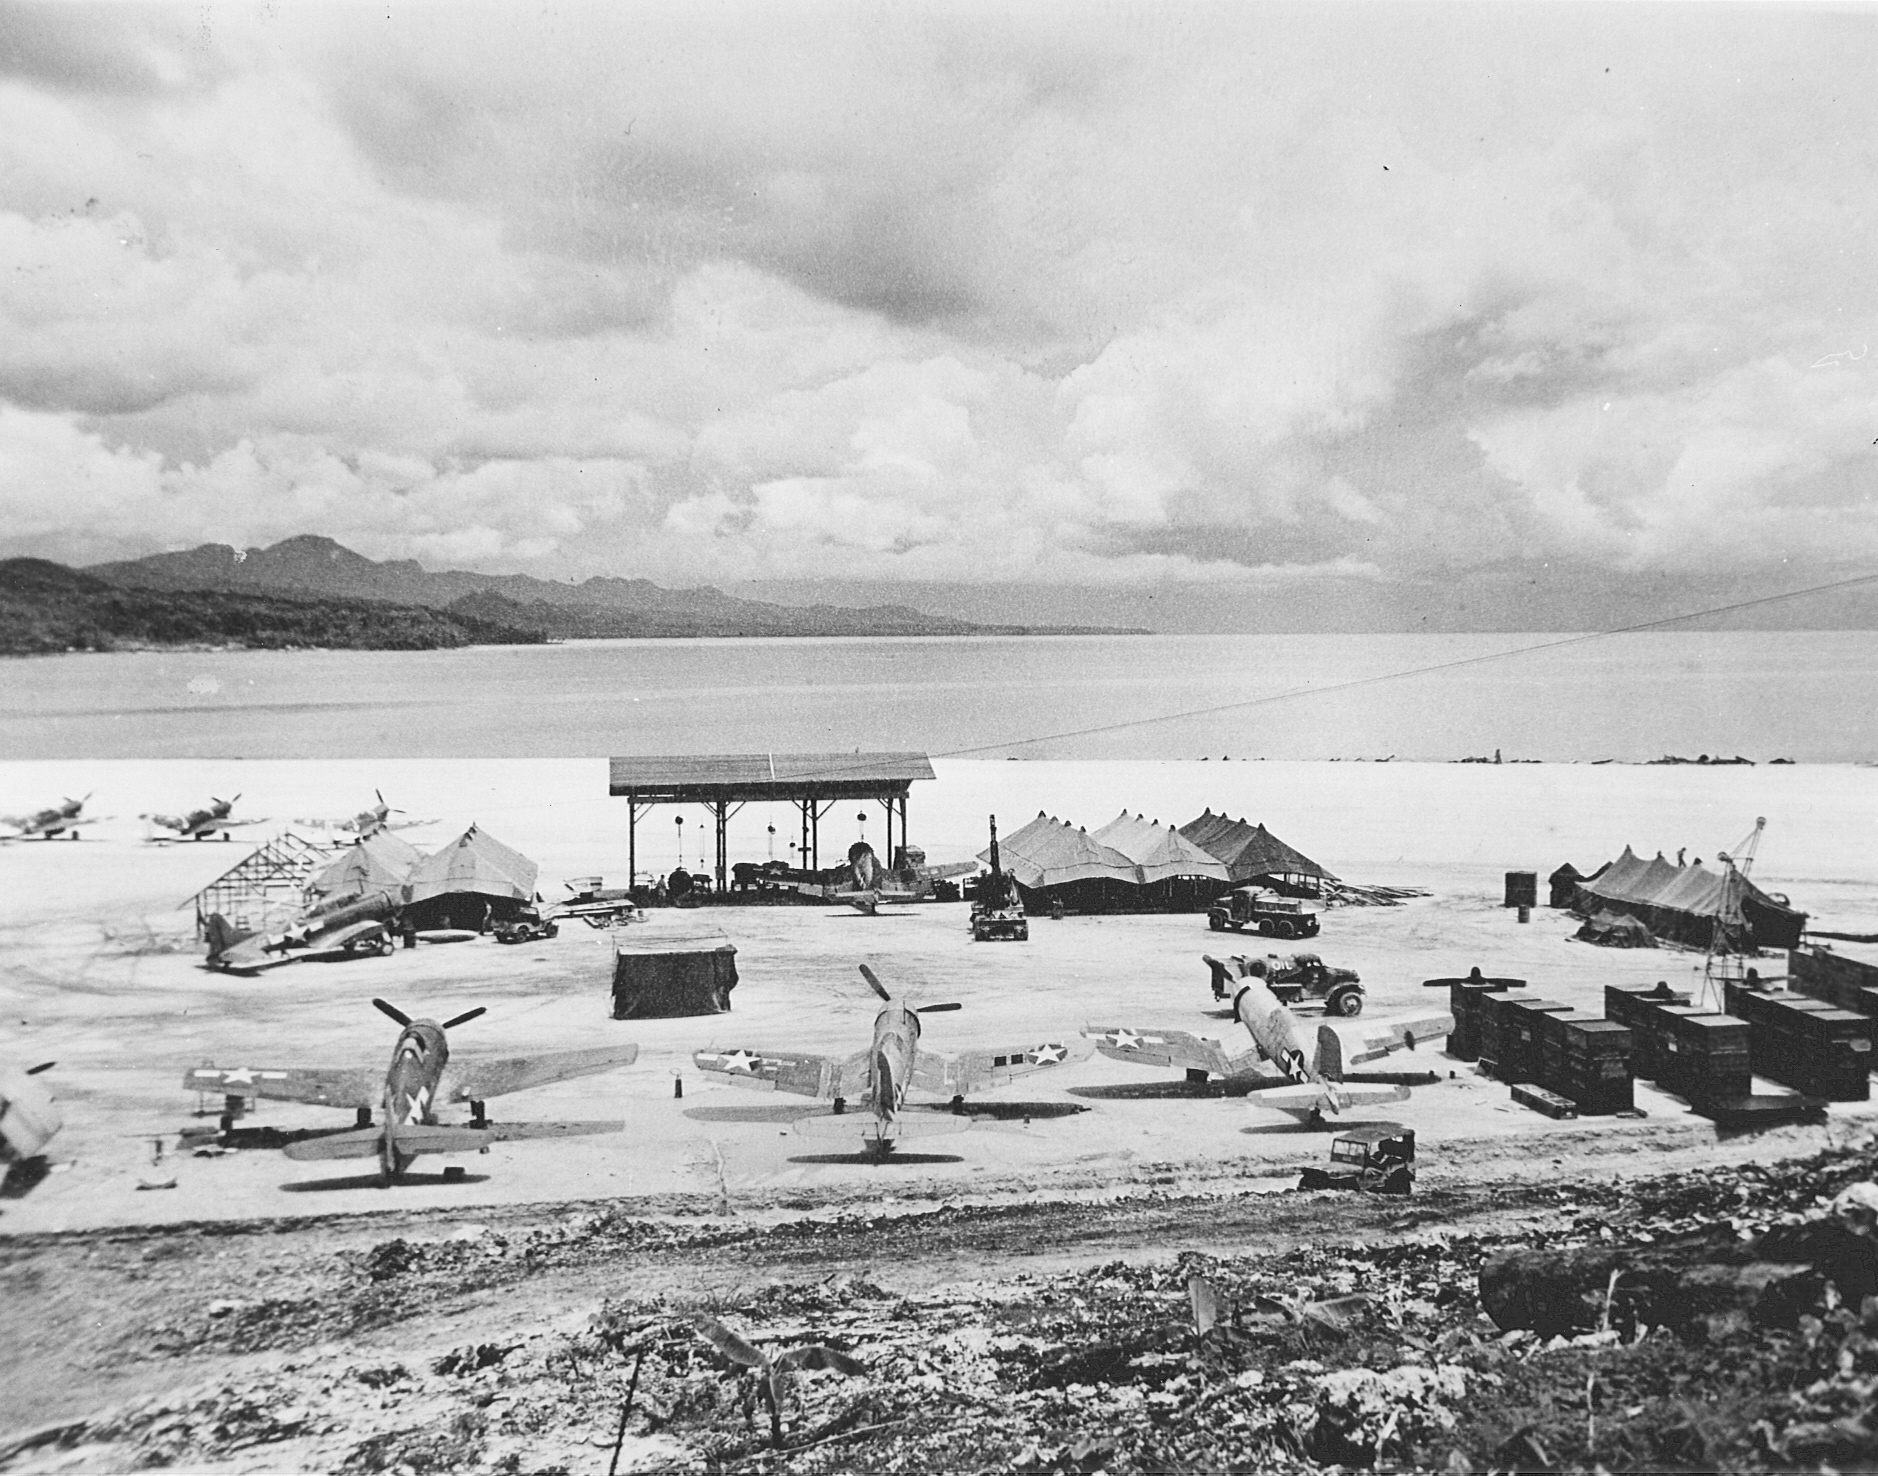 US F4U-1 Corsair, US F6F-3 Hellcat, US SBD Dauntless, and New Zealand Kittyhawk Mk. IV aircraft at the Barakoma airfield at Vella Lavella, Solomon Islands, 10 Dec 1943